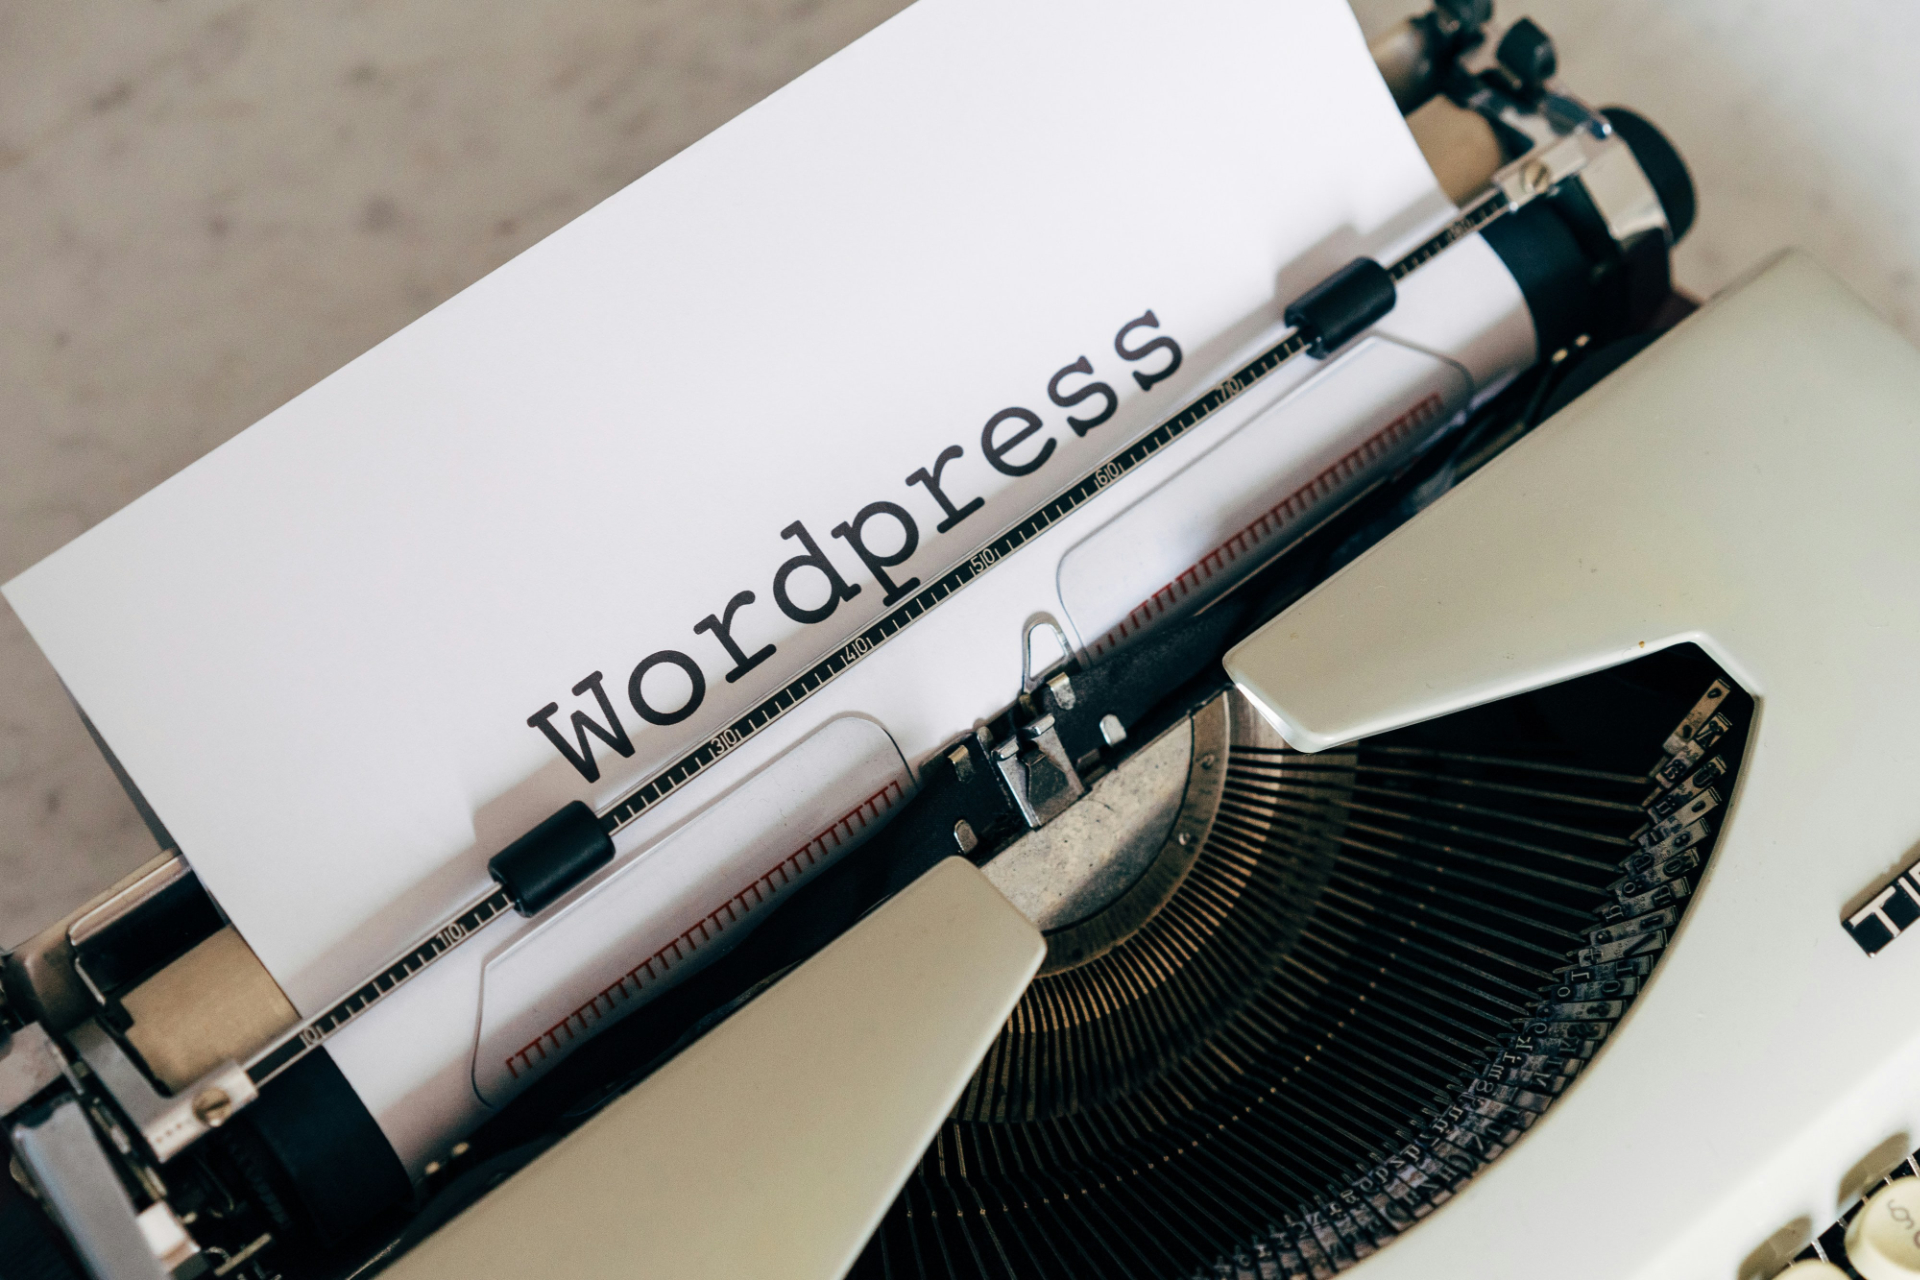 The WordPress Site Editor